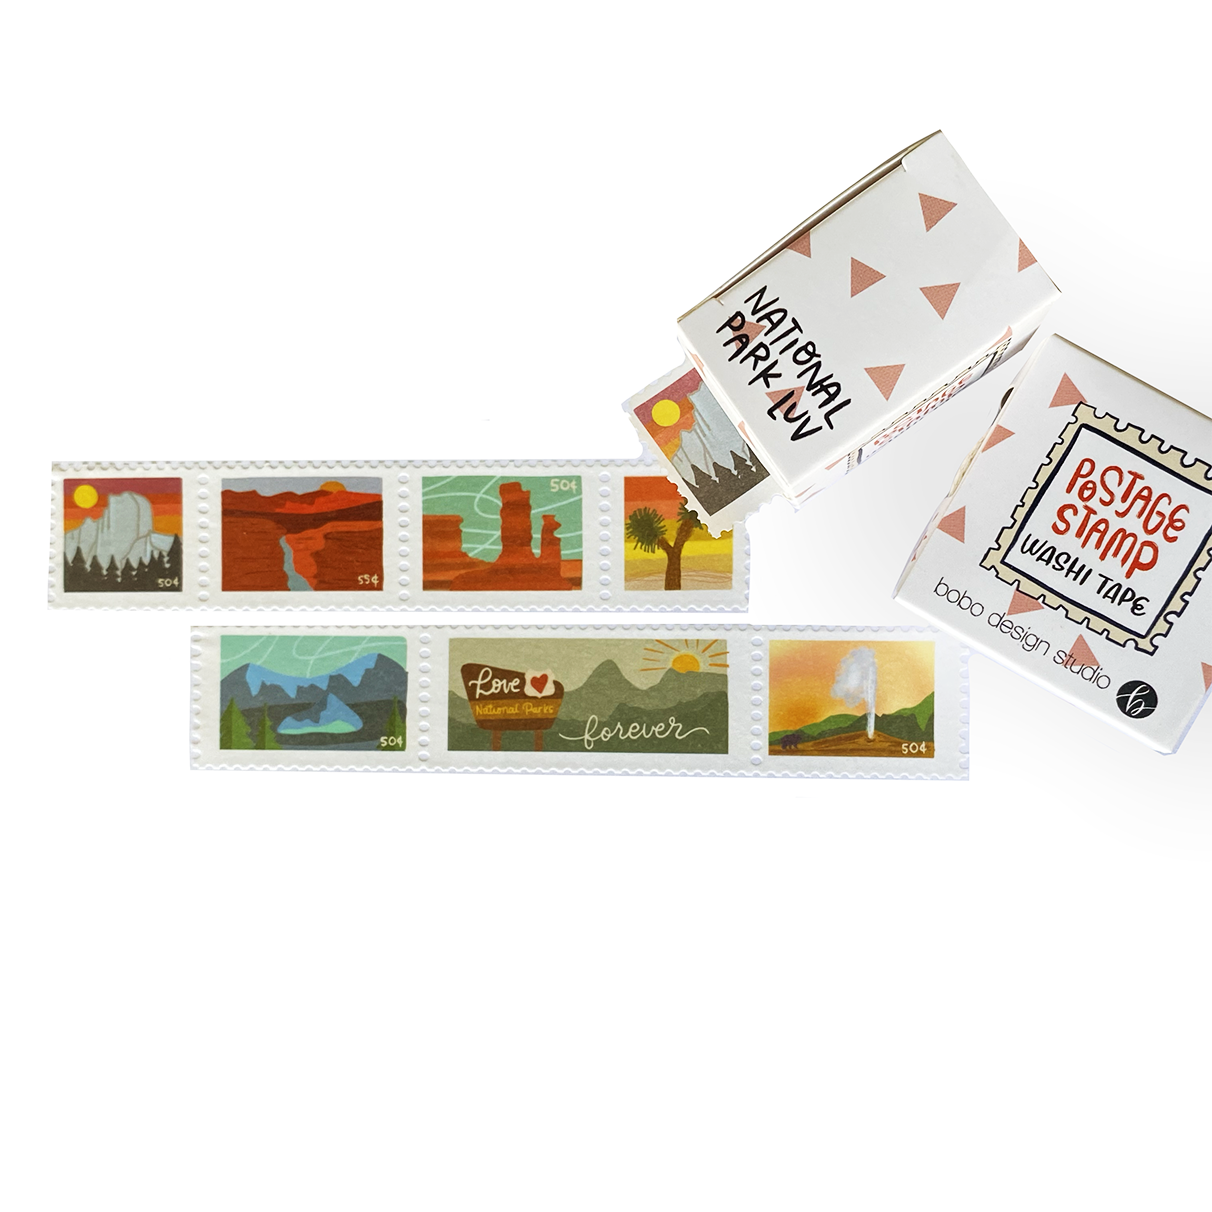 bobo design studio National Park Luv Postage Stamp Washi Tape